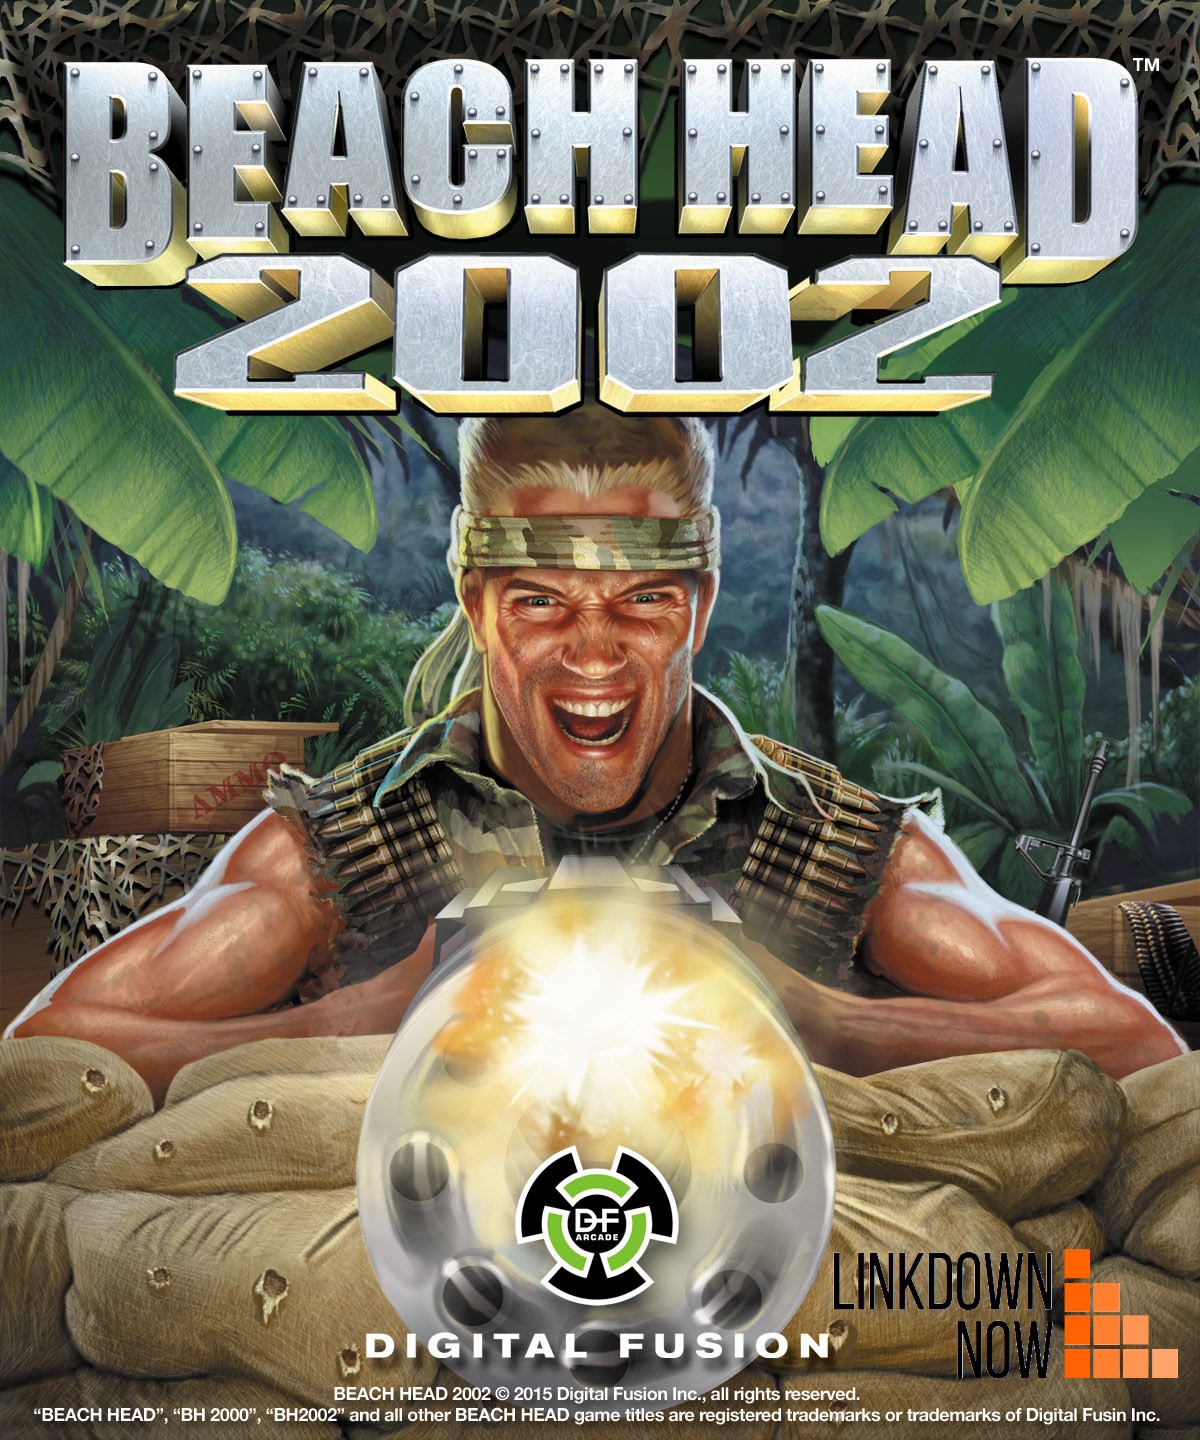 cách tải beach head 2002